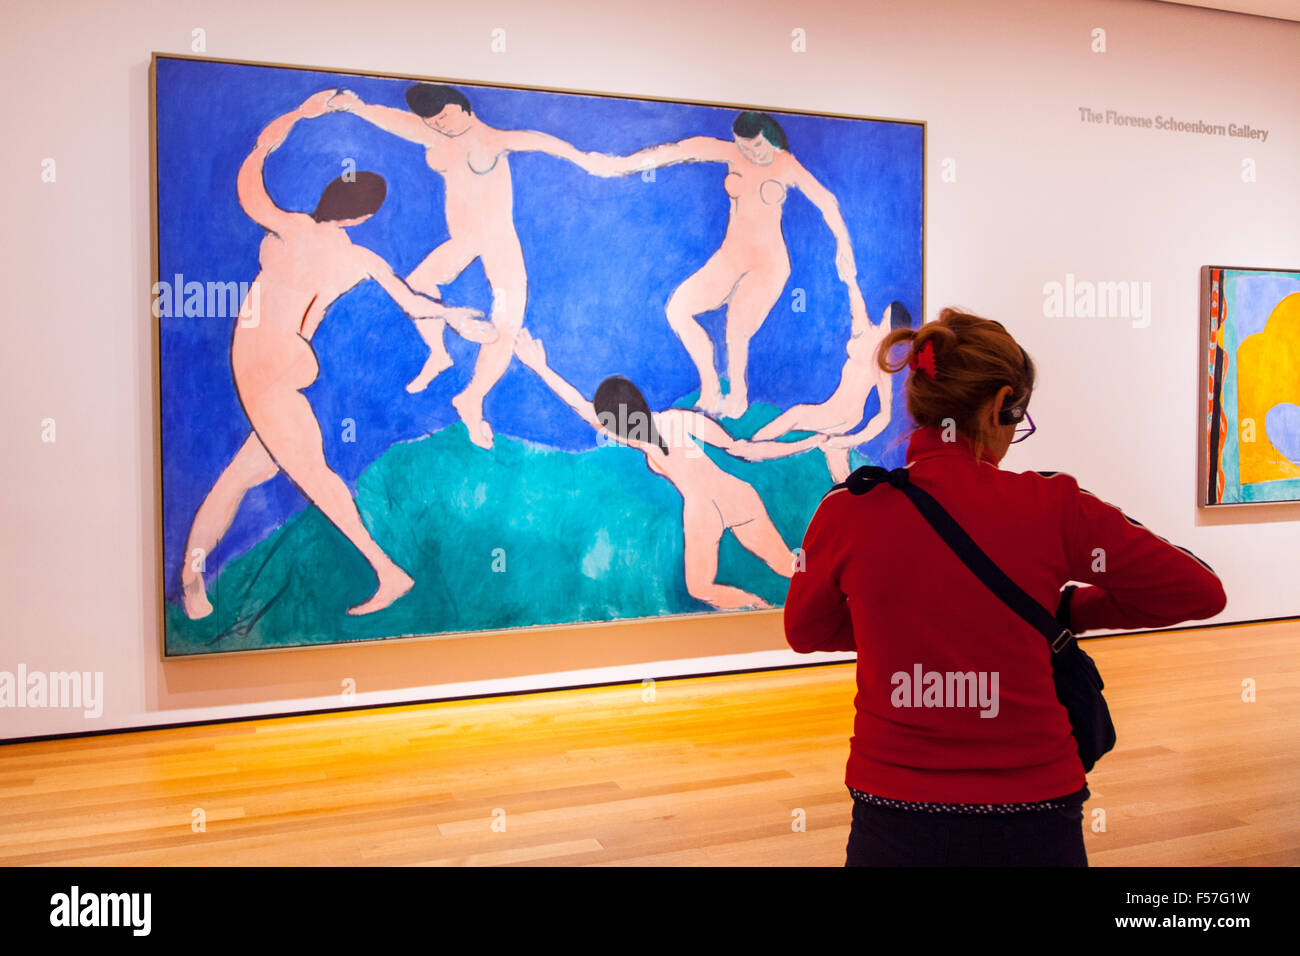 Matisse Museum Modern Art Fotos e Imágenes de stock - Alamy